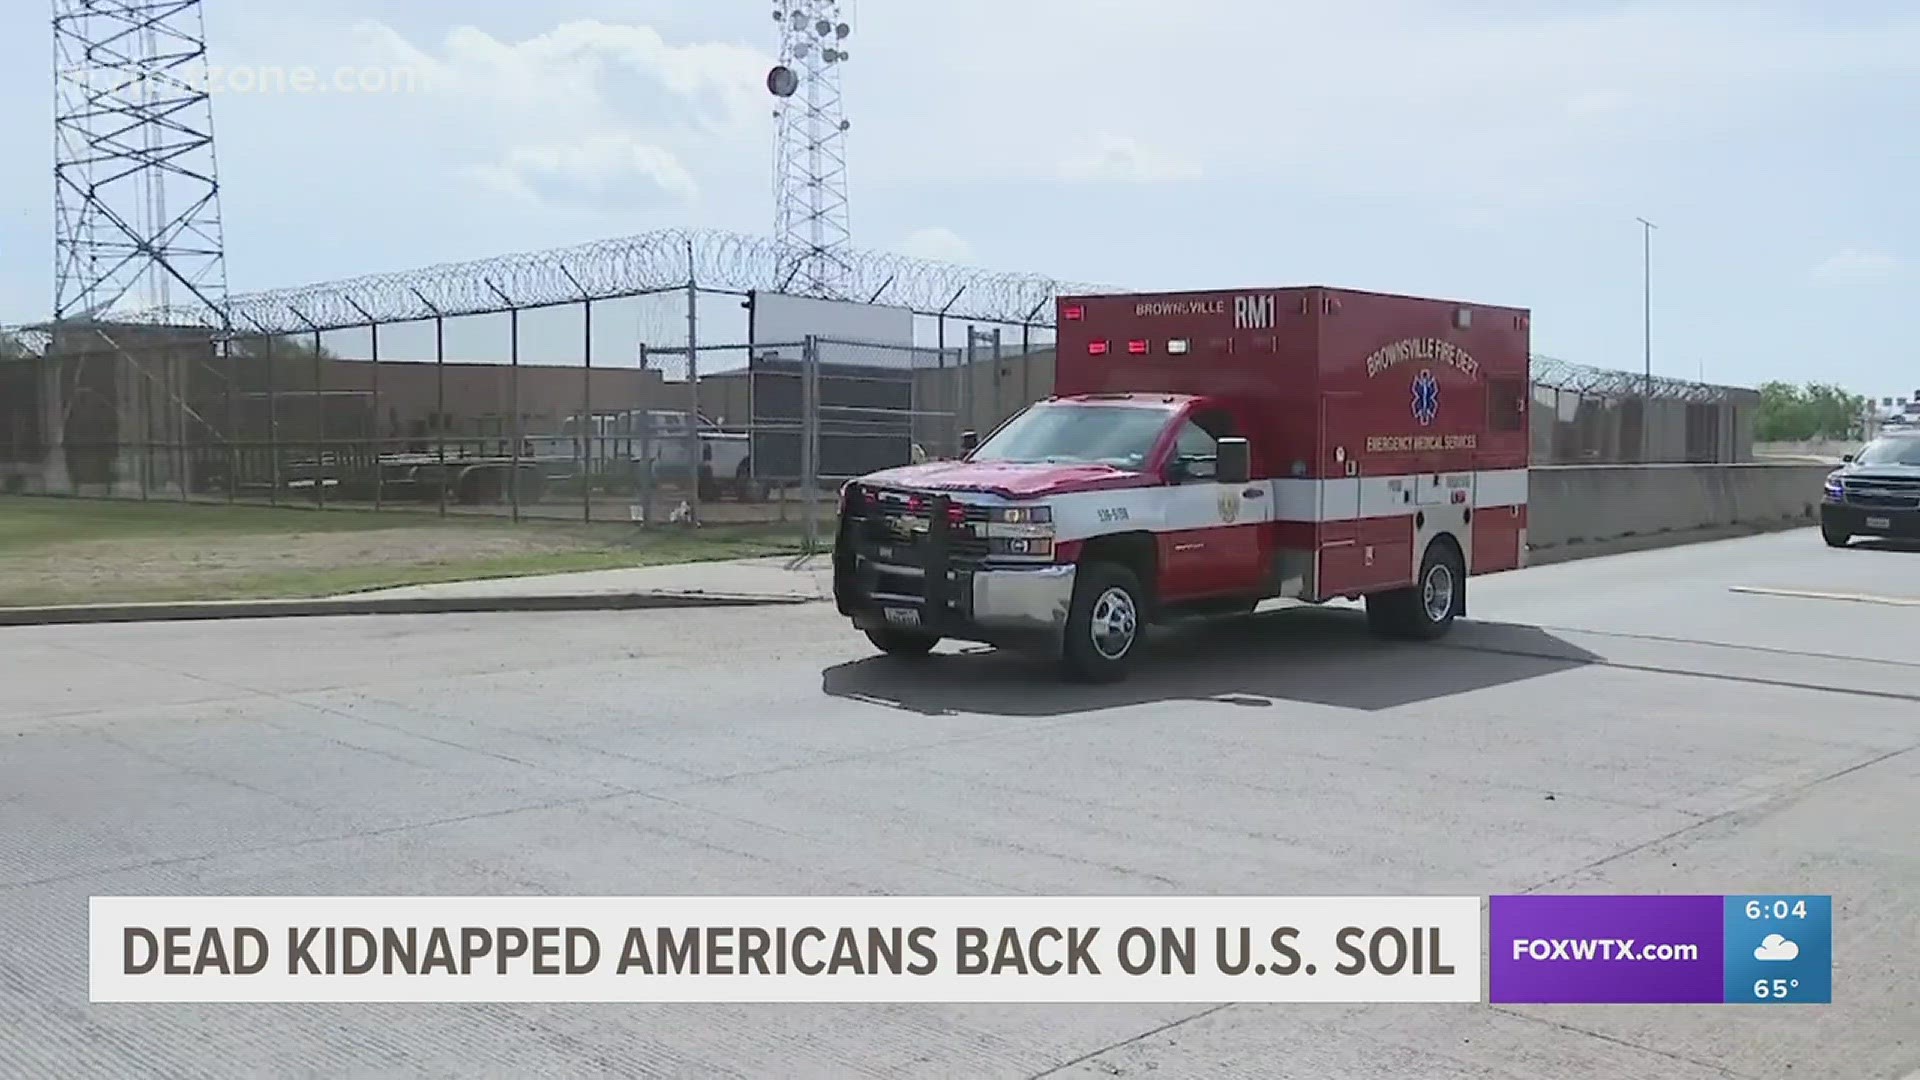 Dead kidnapped Americans back on U.S soil